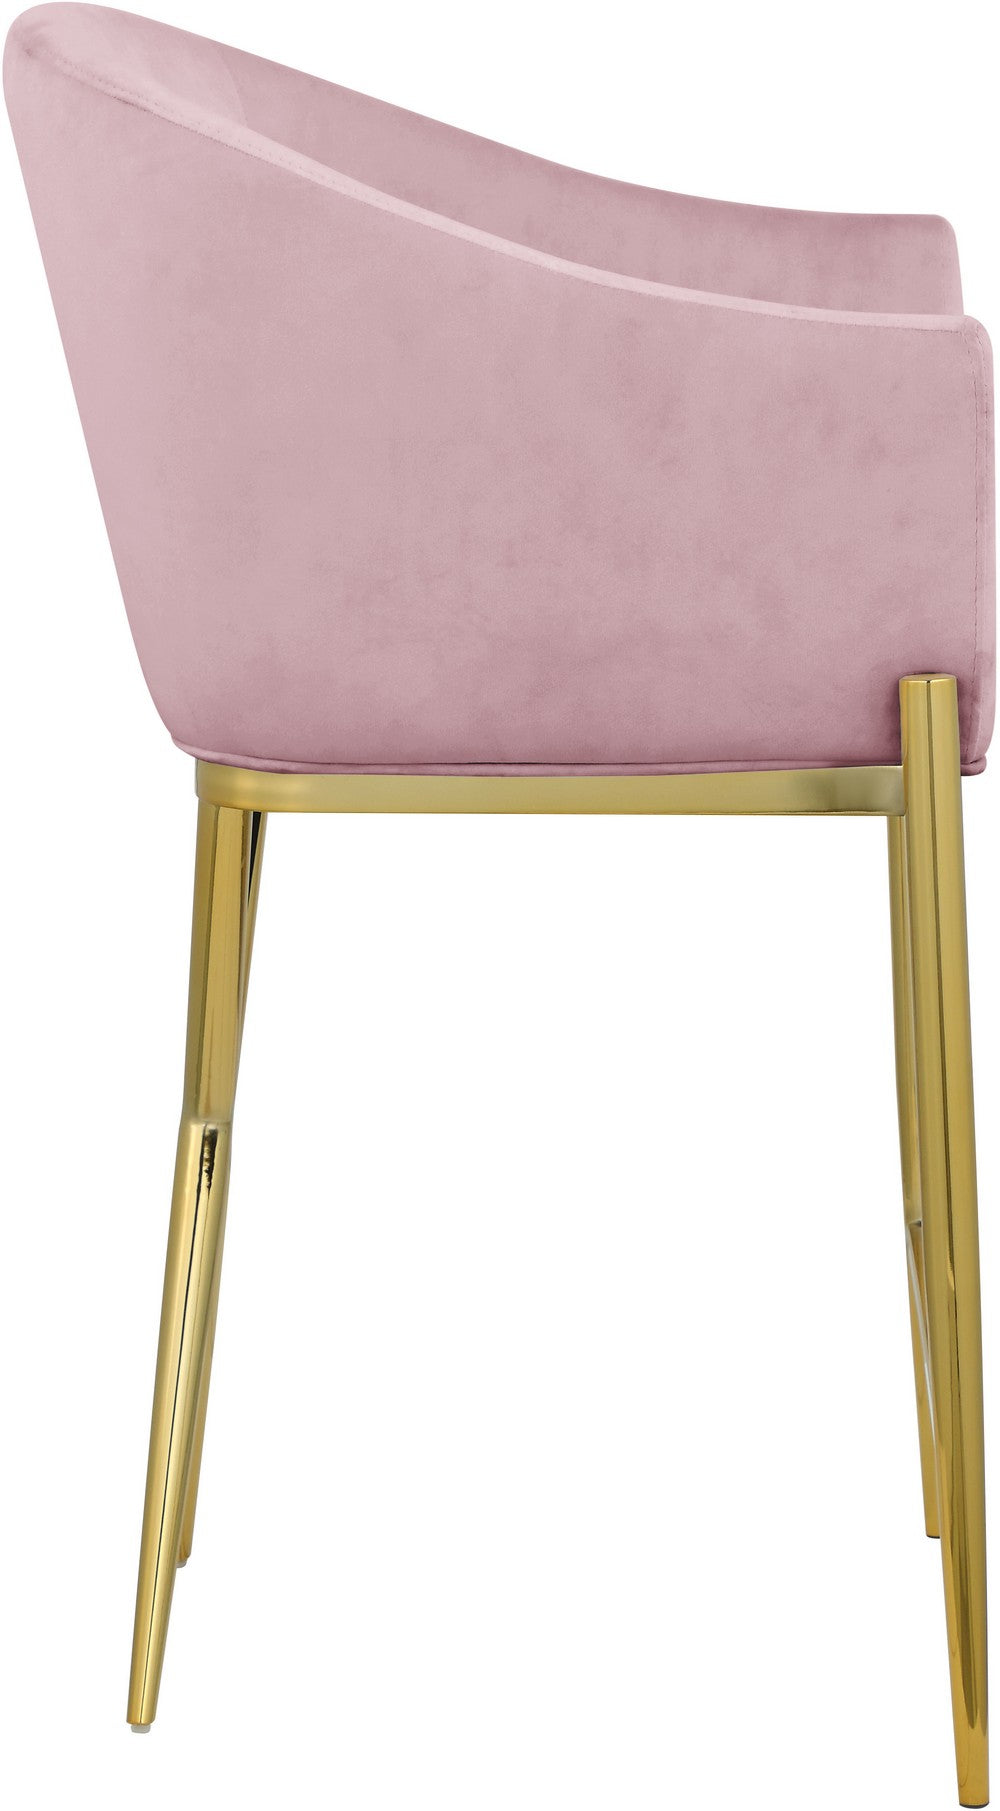 Meridian Furniture Xavier Pink Velvet Counter Stool ( Quantity of 1 Stool )